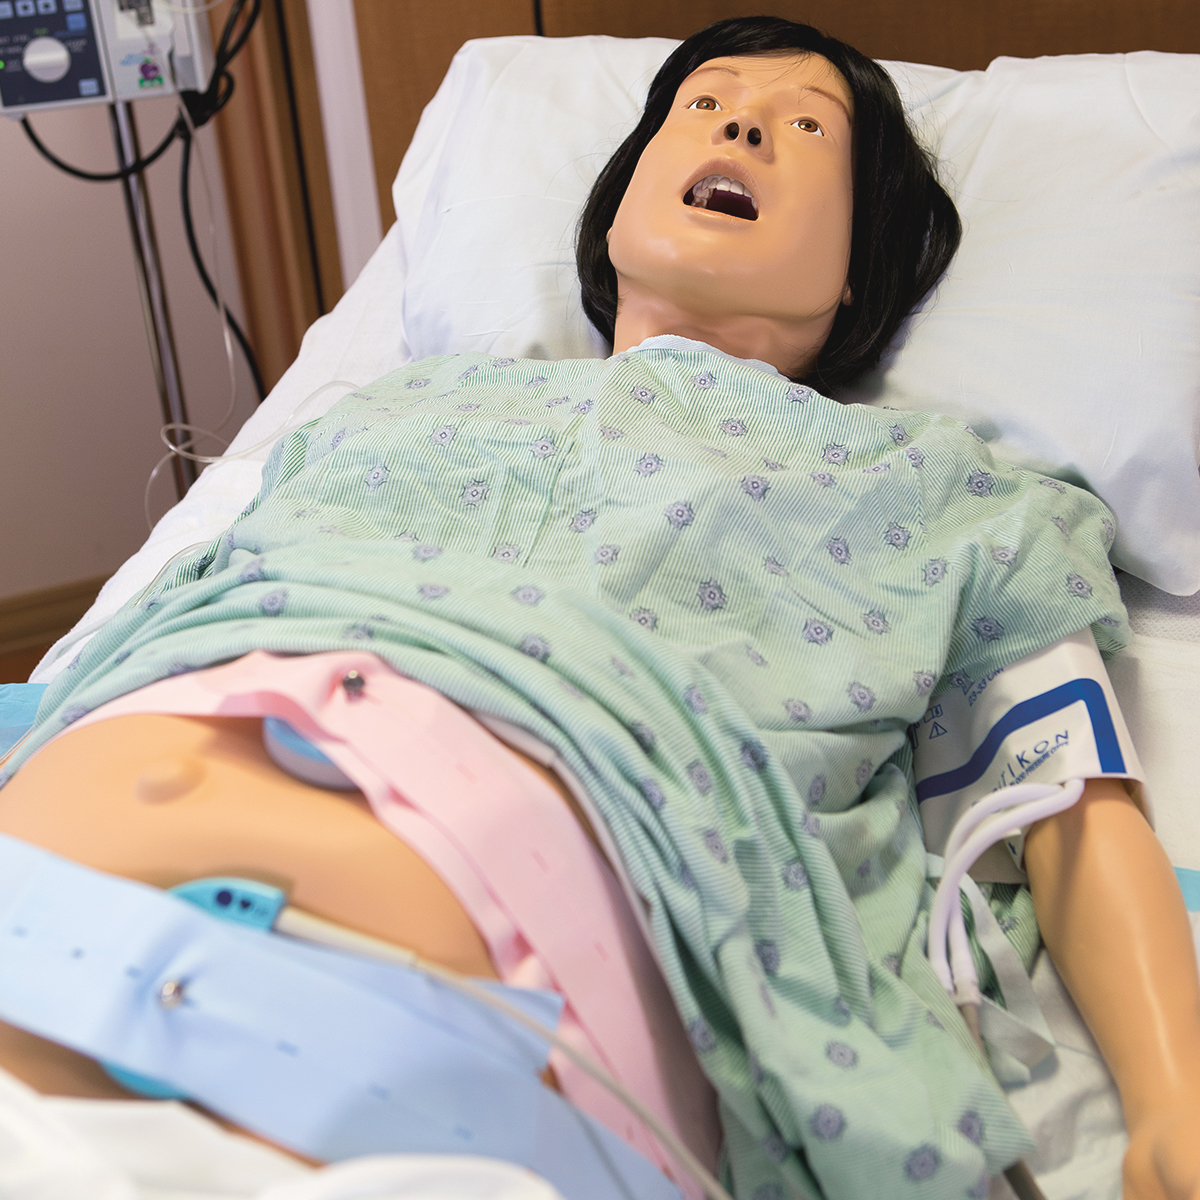 Lucy Maternal and Neonatal Birthing Simulator - Advanced [SKU